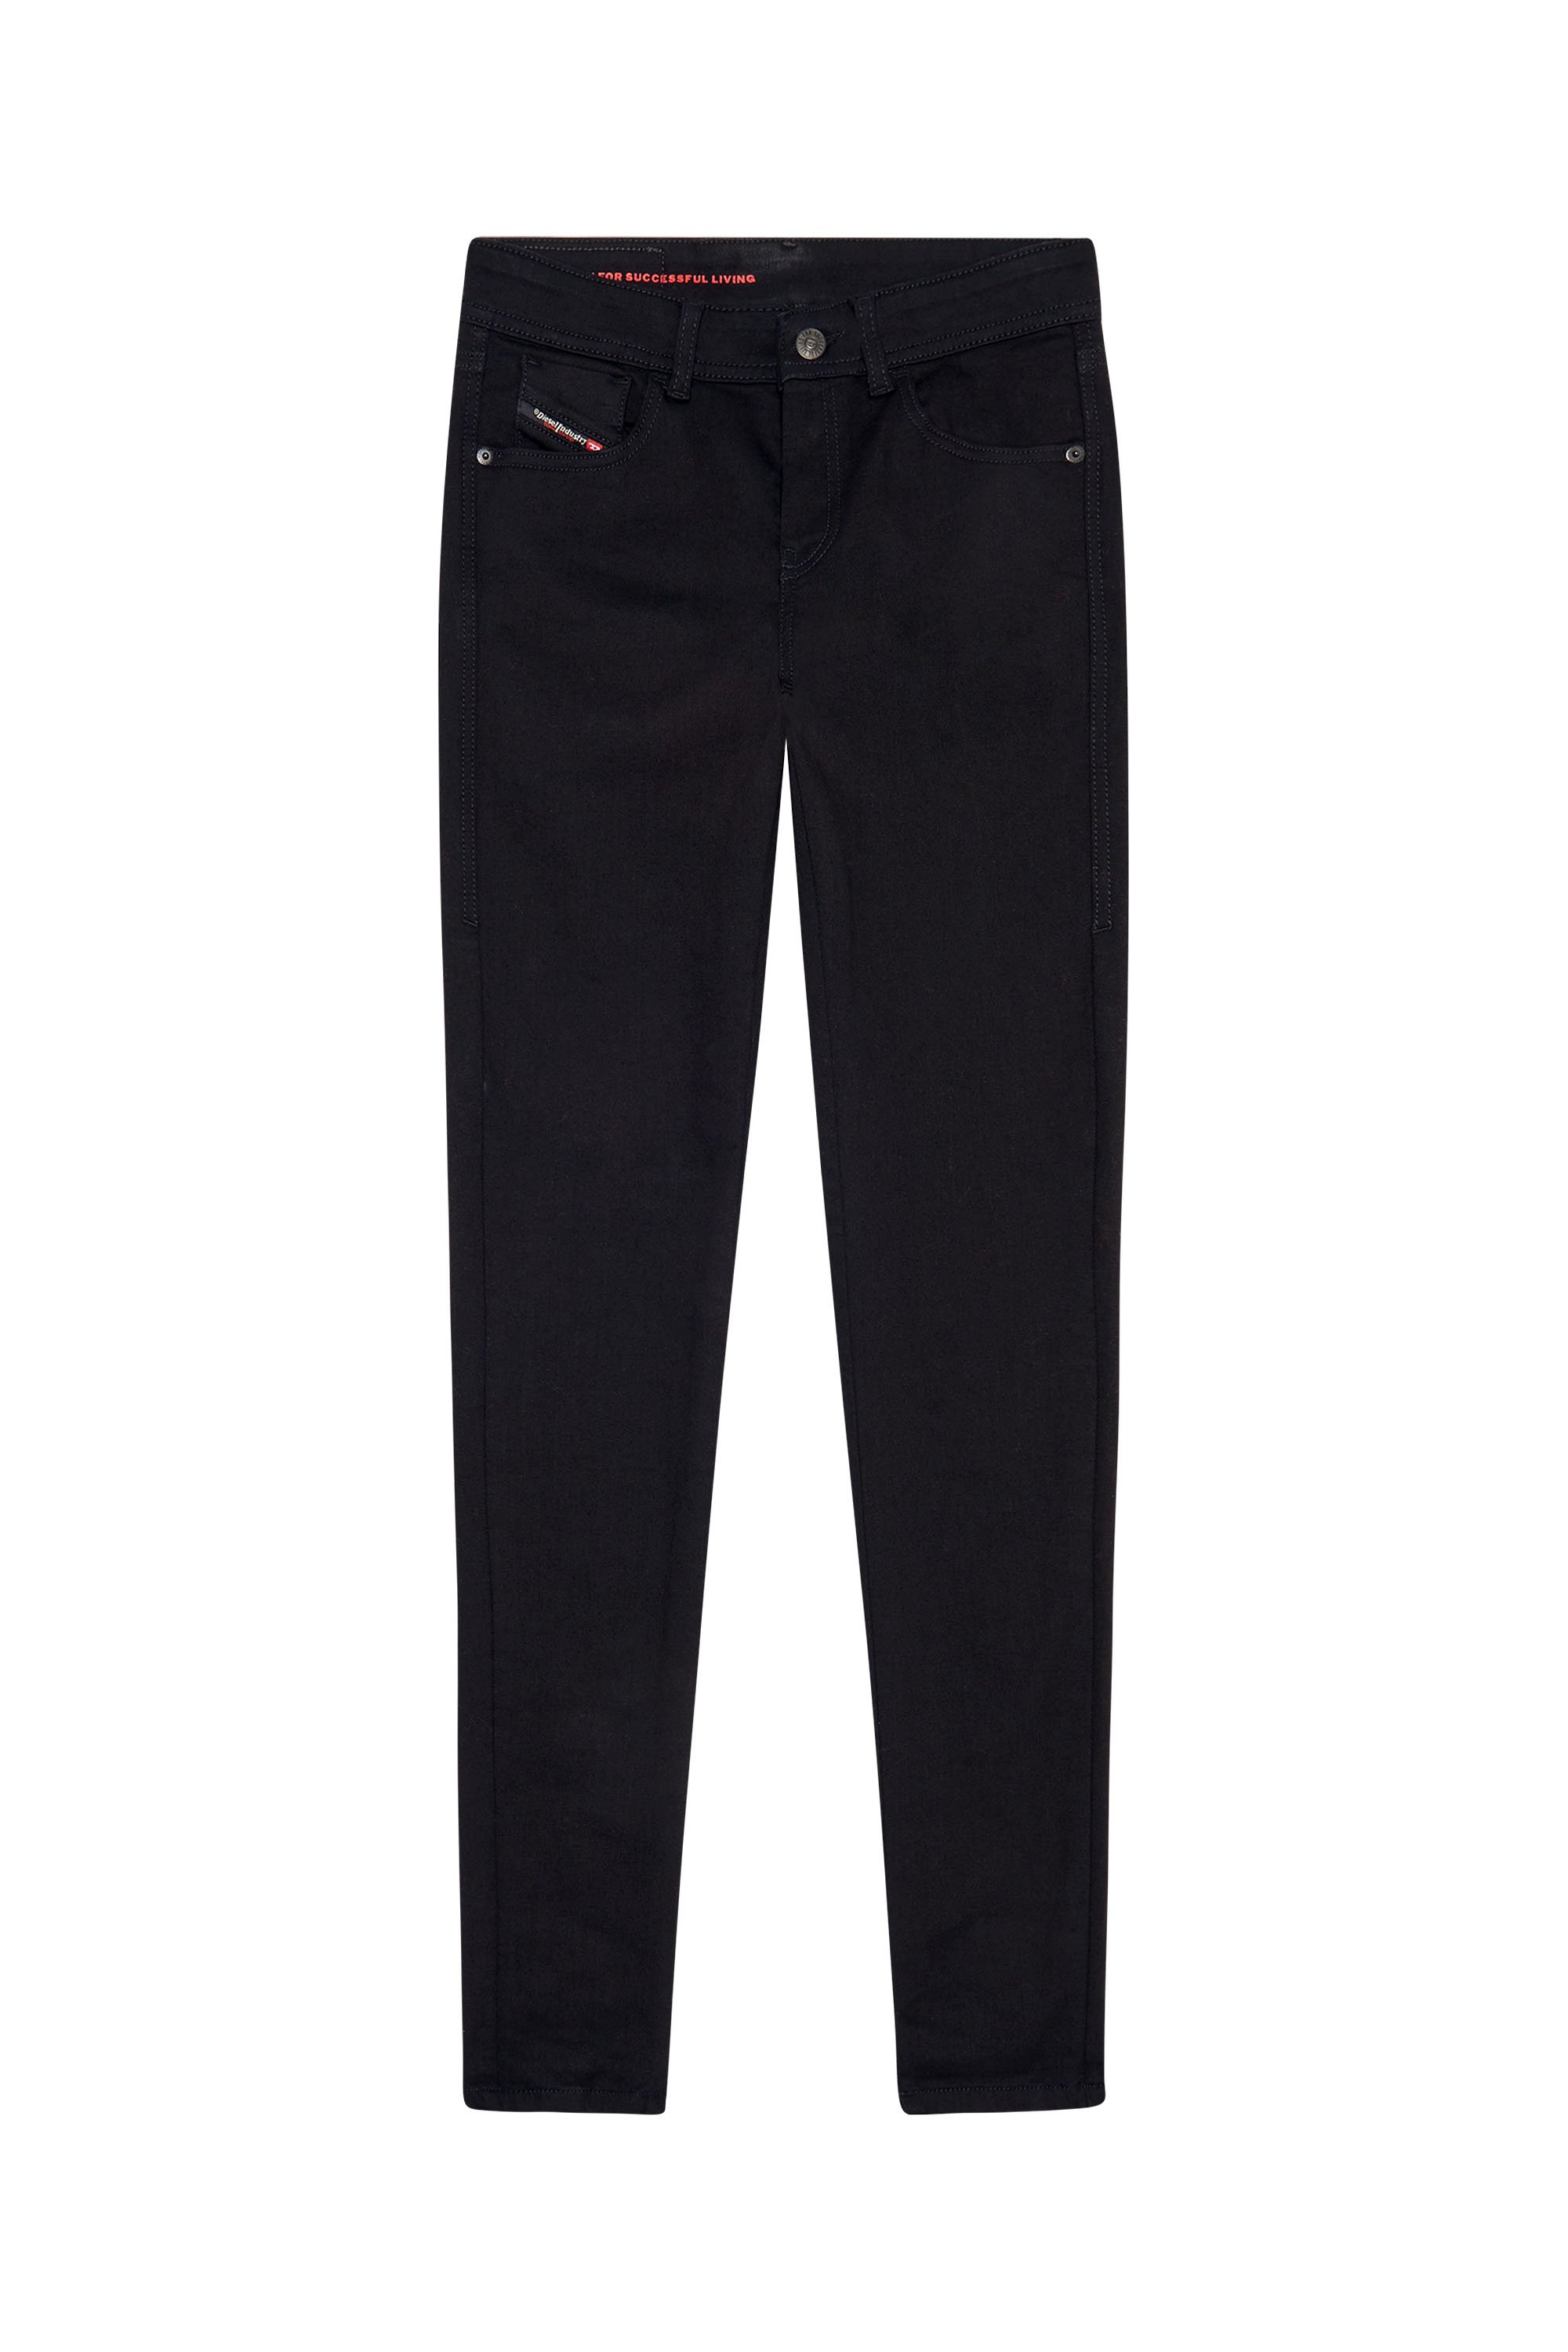 2017 Slandy 069EF Super skinny Jeans, Black/Dark grey